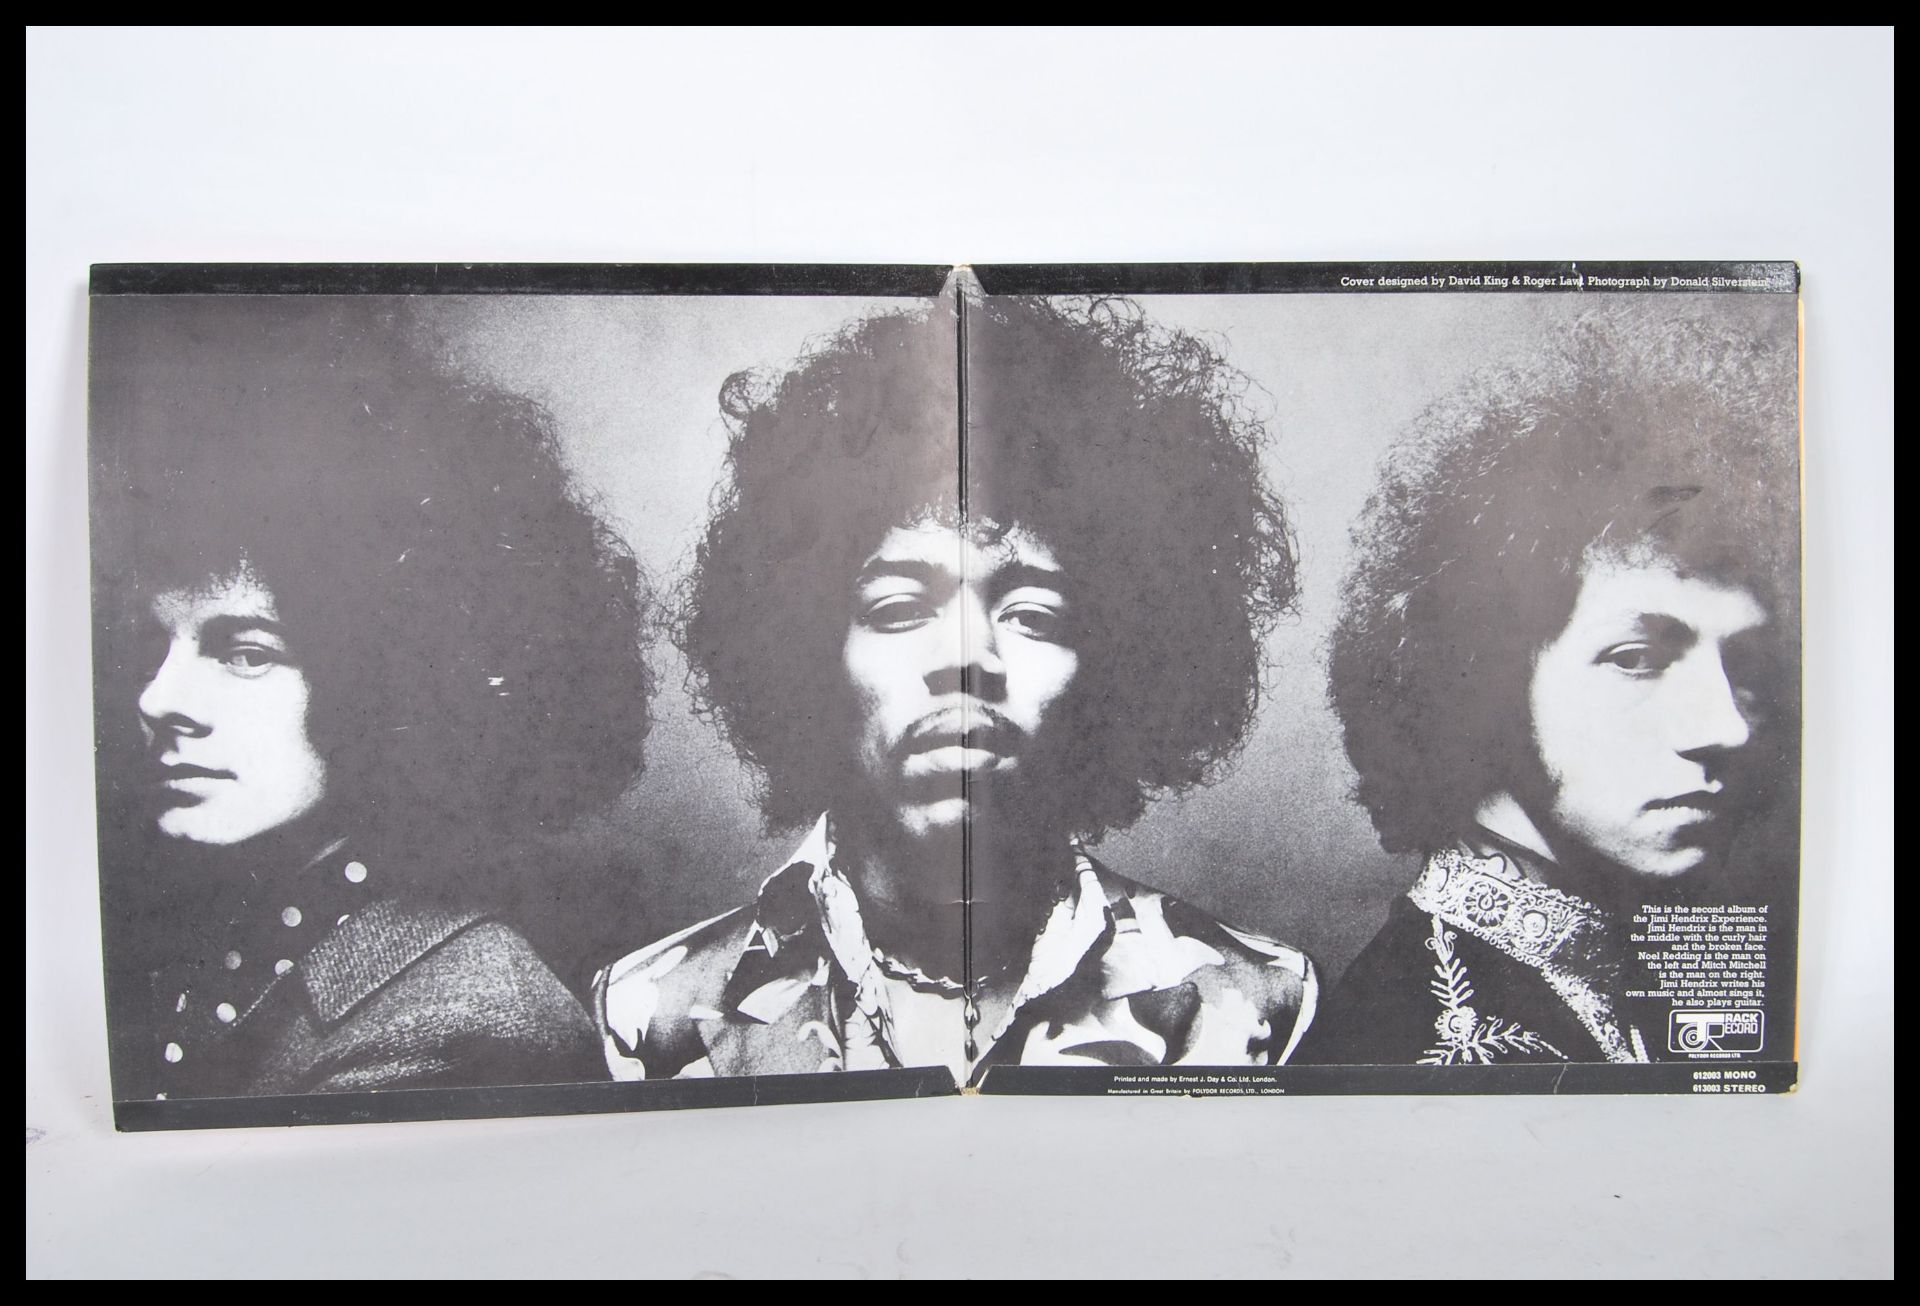 Jimi Hendrix Experience – Axis: Bold As Love - Bild 3 aus 8